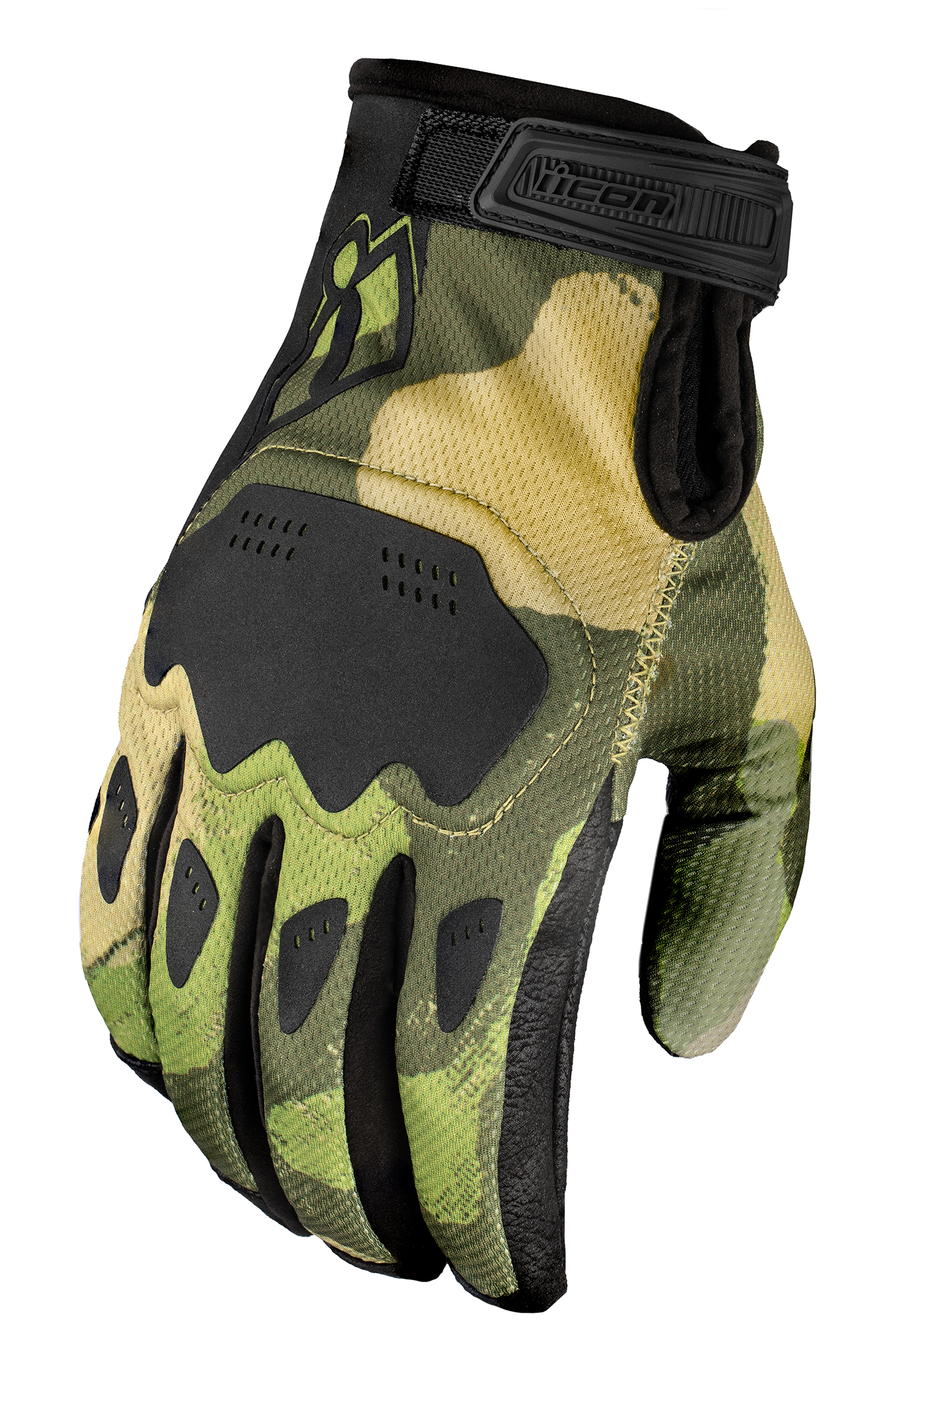 ICON Hooligan Magnacross™ Gloves - Camo Tan - Medium 3301-4828